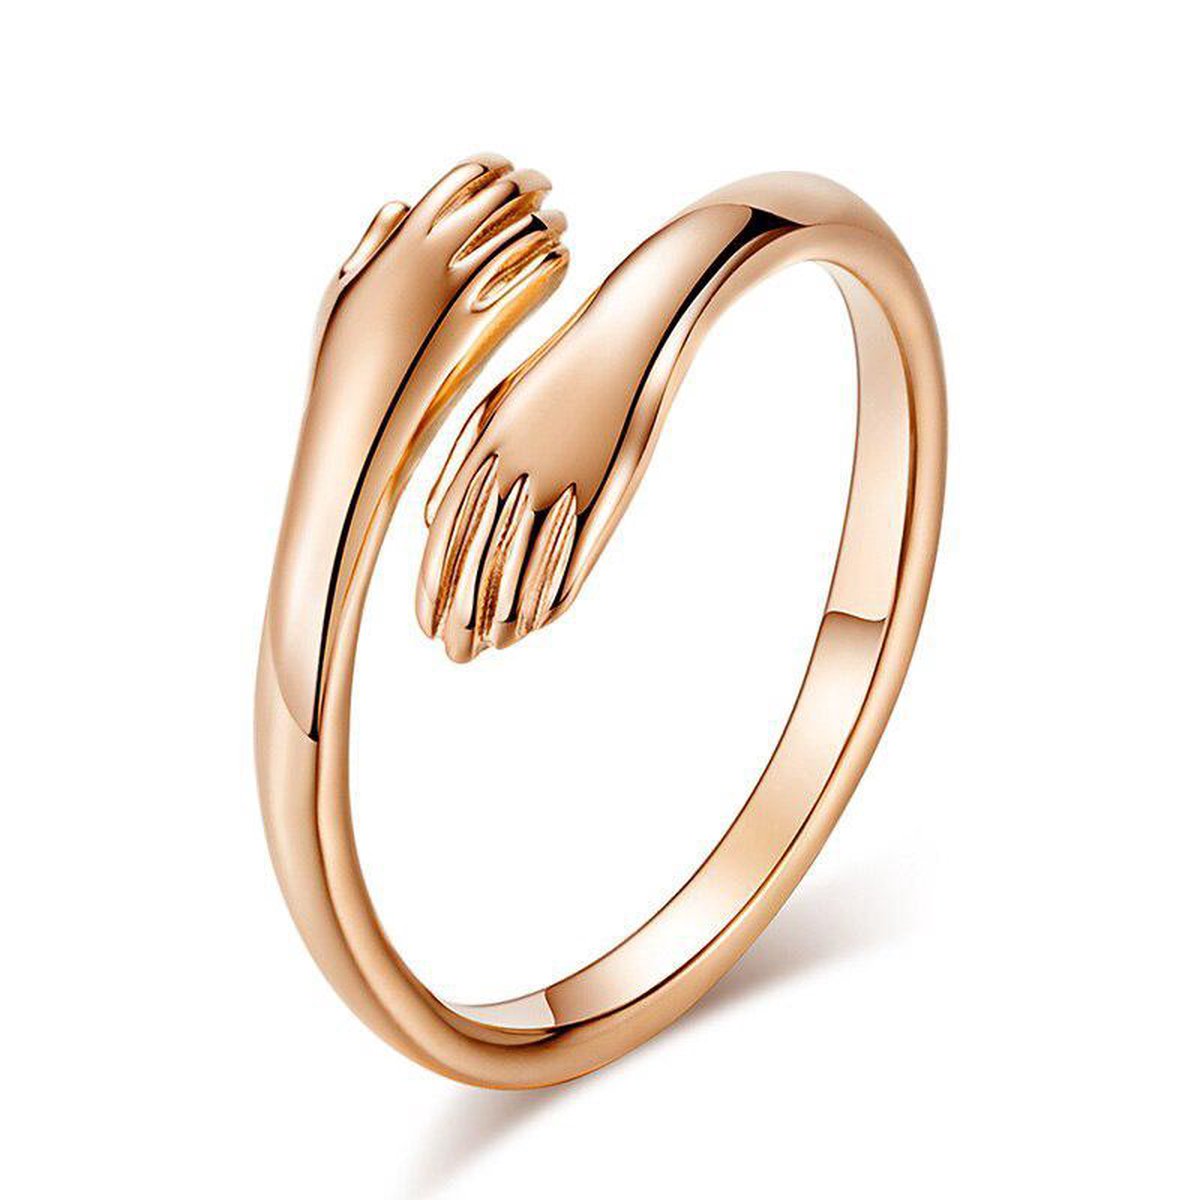 24/7 Jewelry Collection Knuffel Ring - Knuffelring - Handen - Handjes - Vriendschapsring - Hug - Verstelbaar - Verstelbare Ring - Rosé Goudkleurig - Amodi